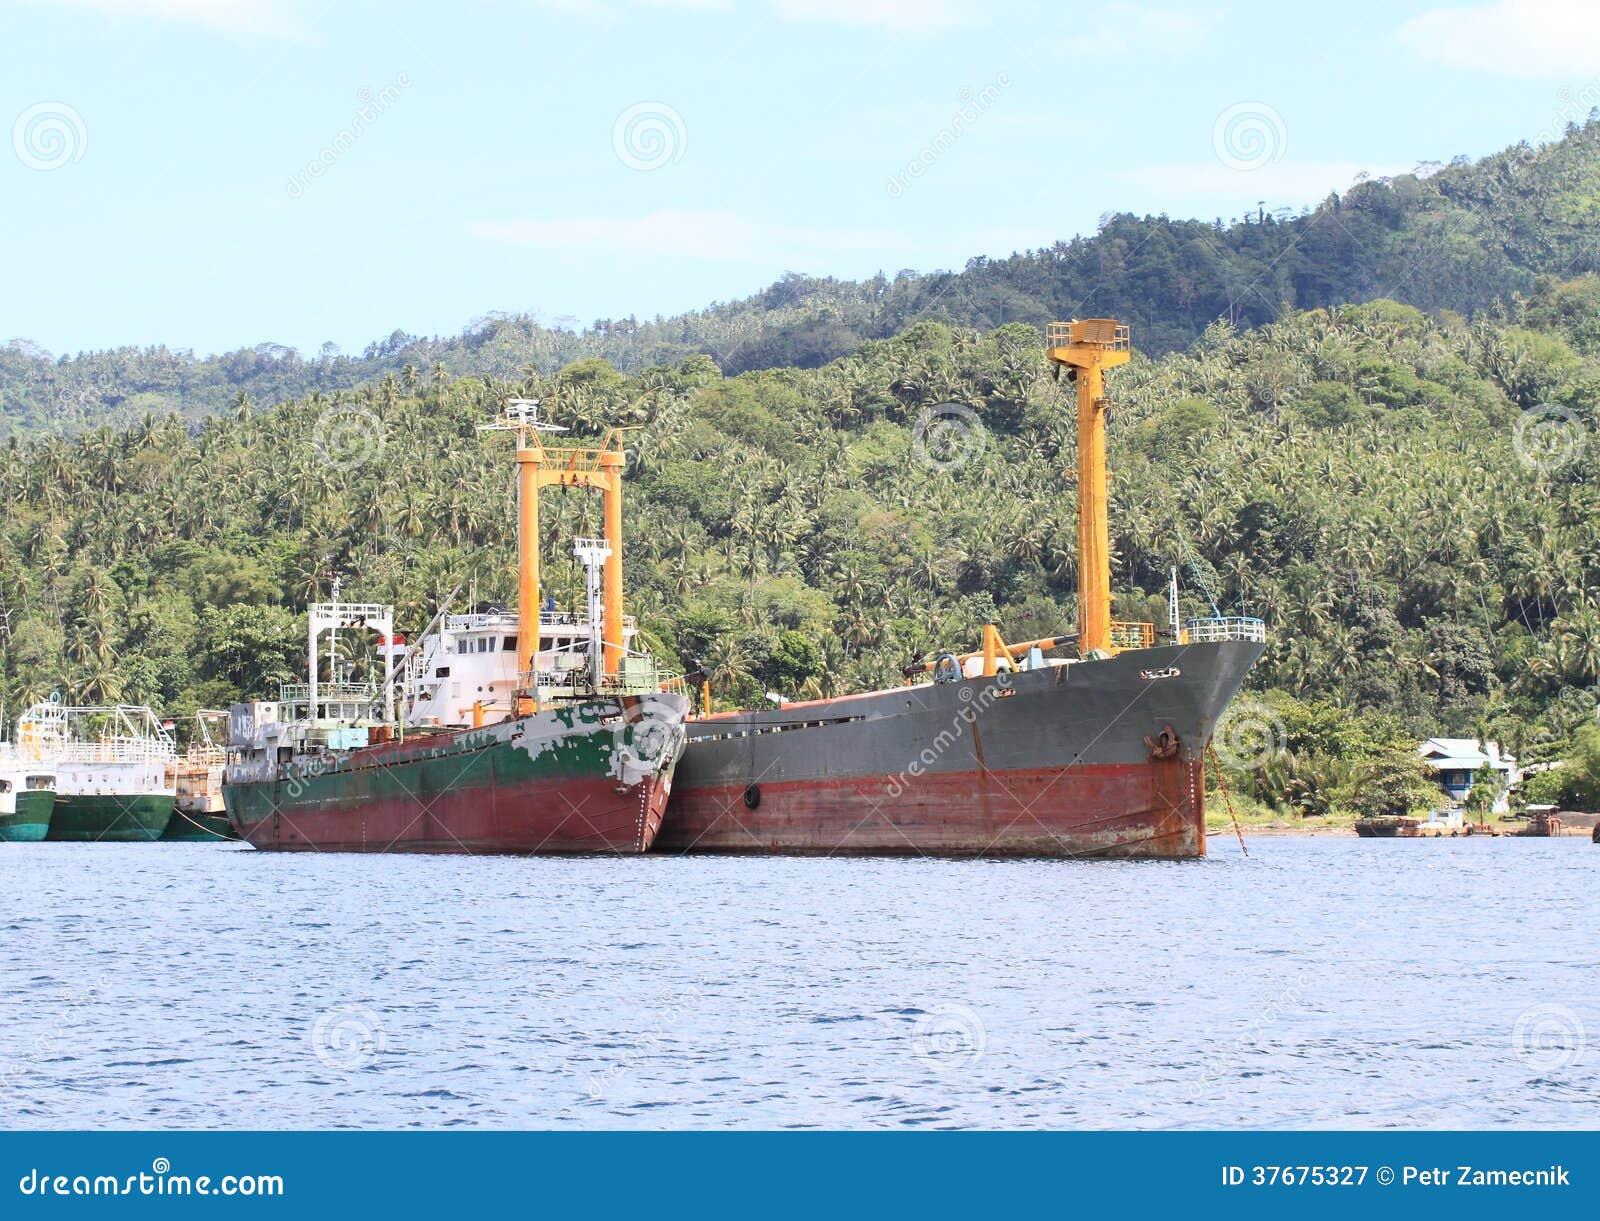 Ocean ship stock image. Image of blue, anchore, shipping